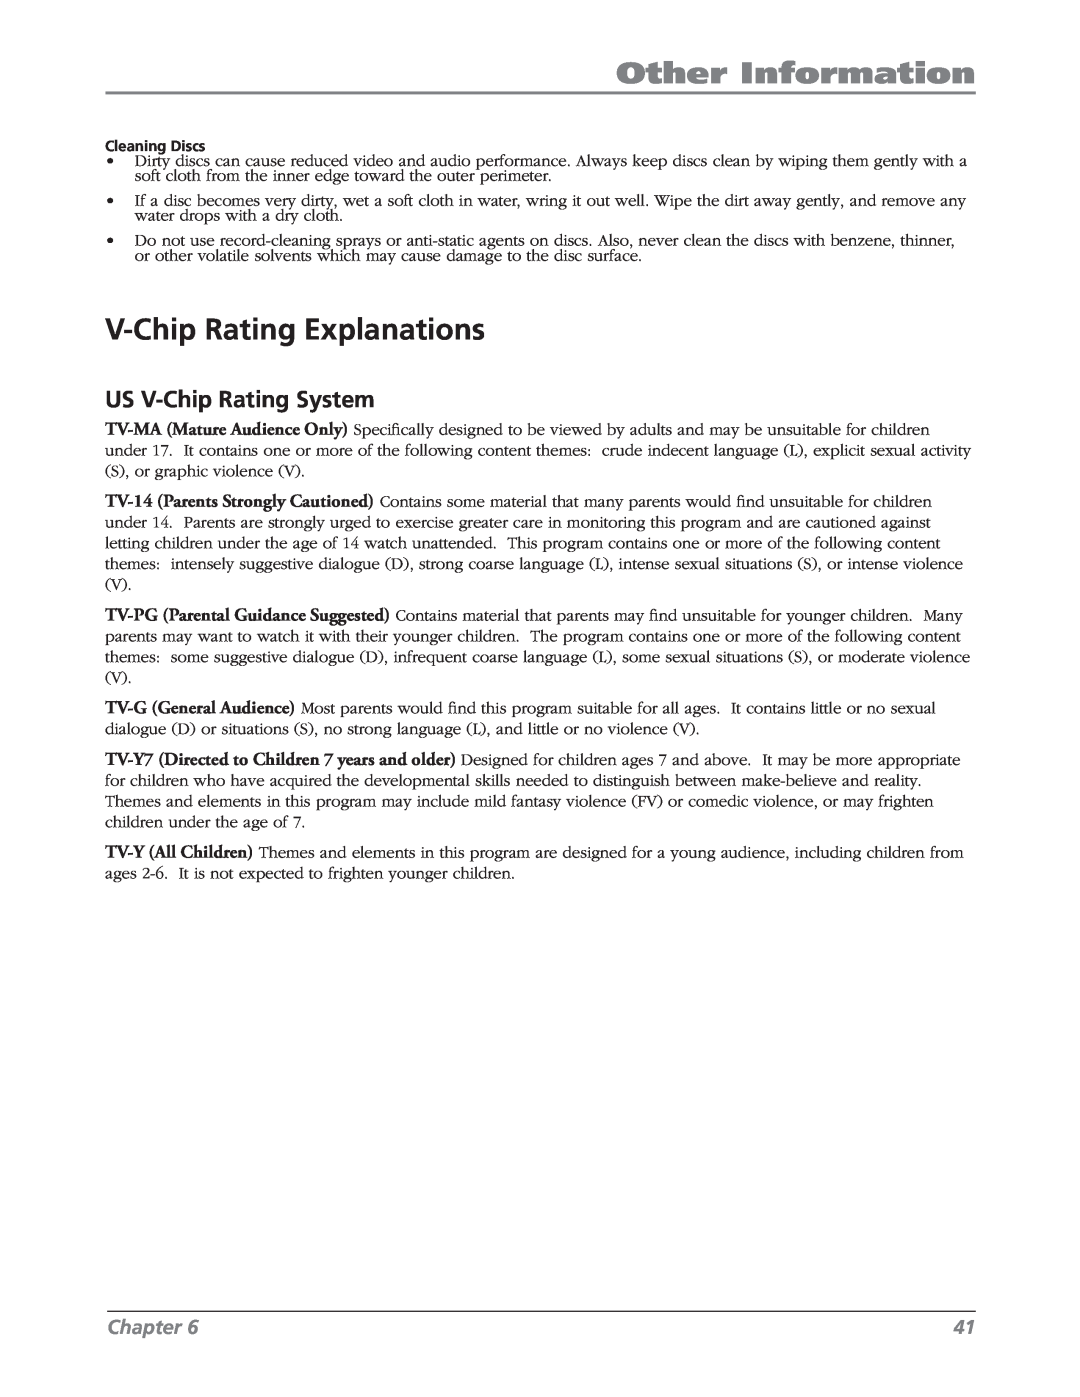 RCA L26WD26D warranty V-Chip Rating Explanations, US V-Chip Rating System, Other Information, Chapter 